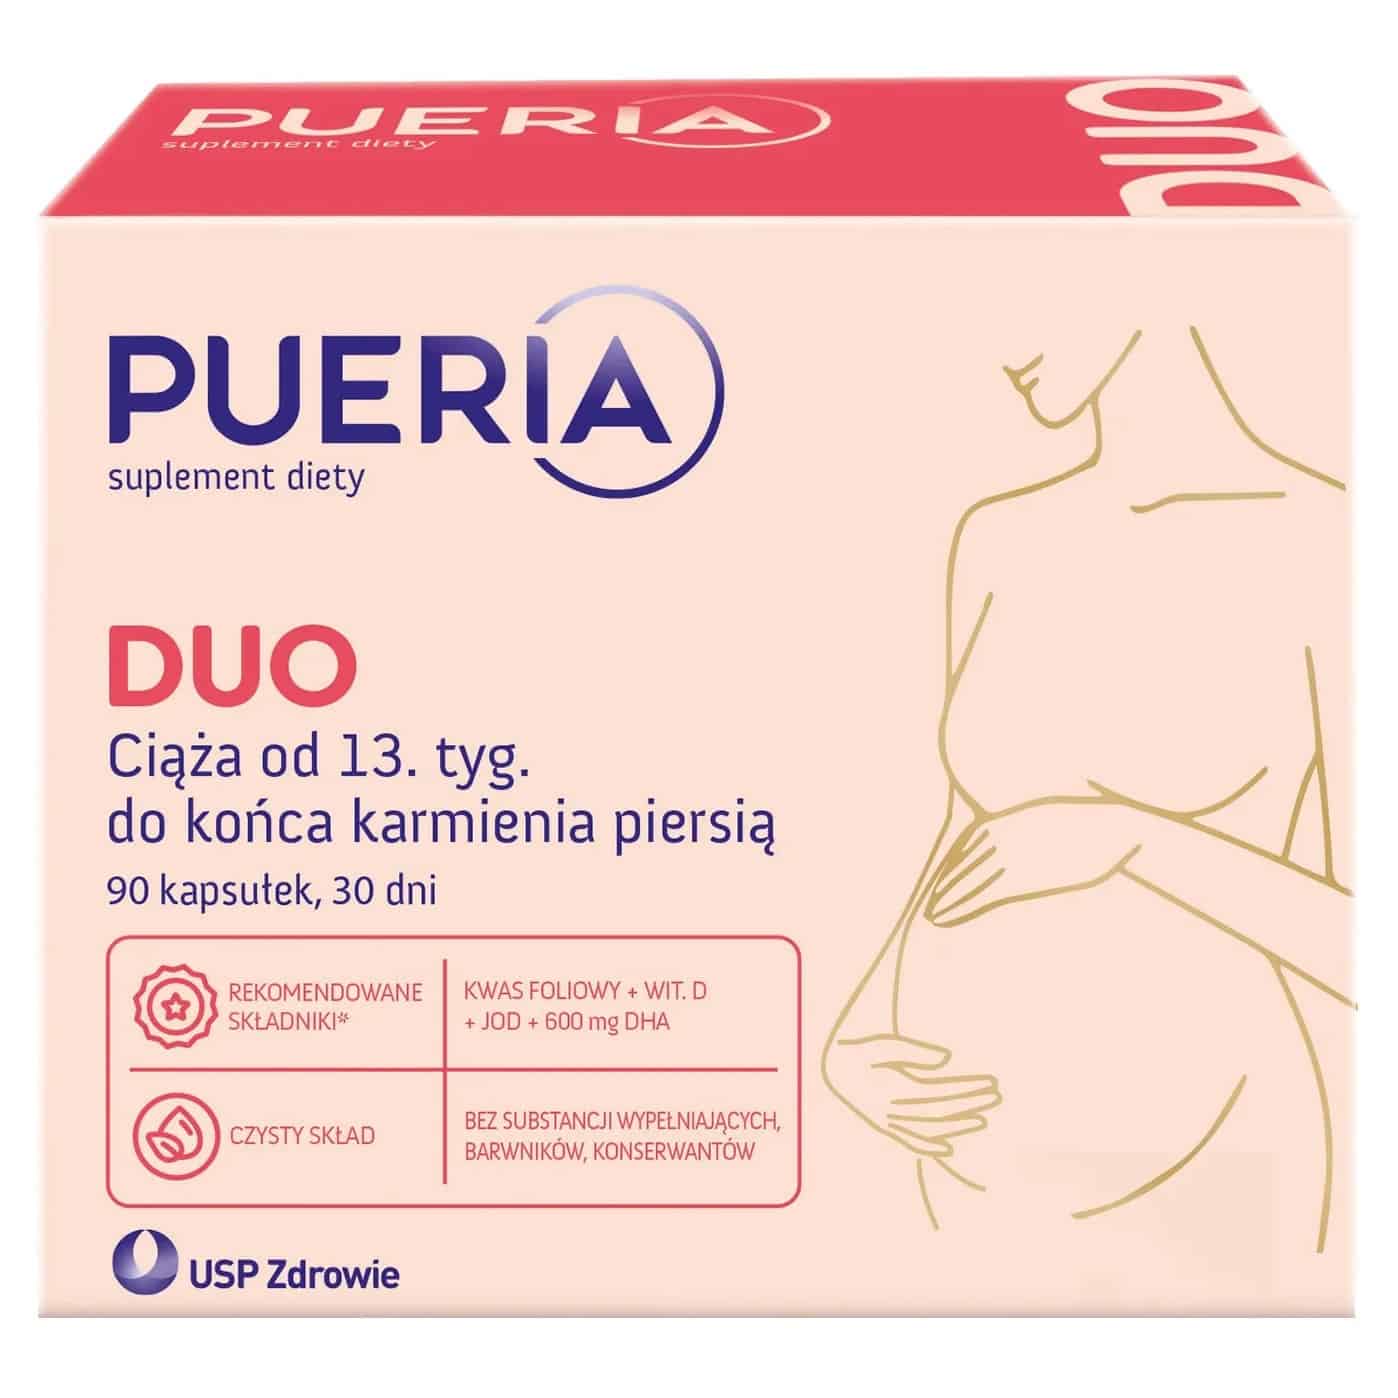 Pueria Duo, witaminy prenatalne, Matka Aptekarka